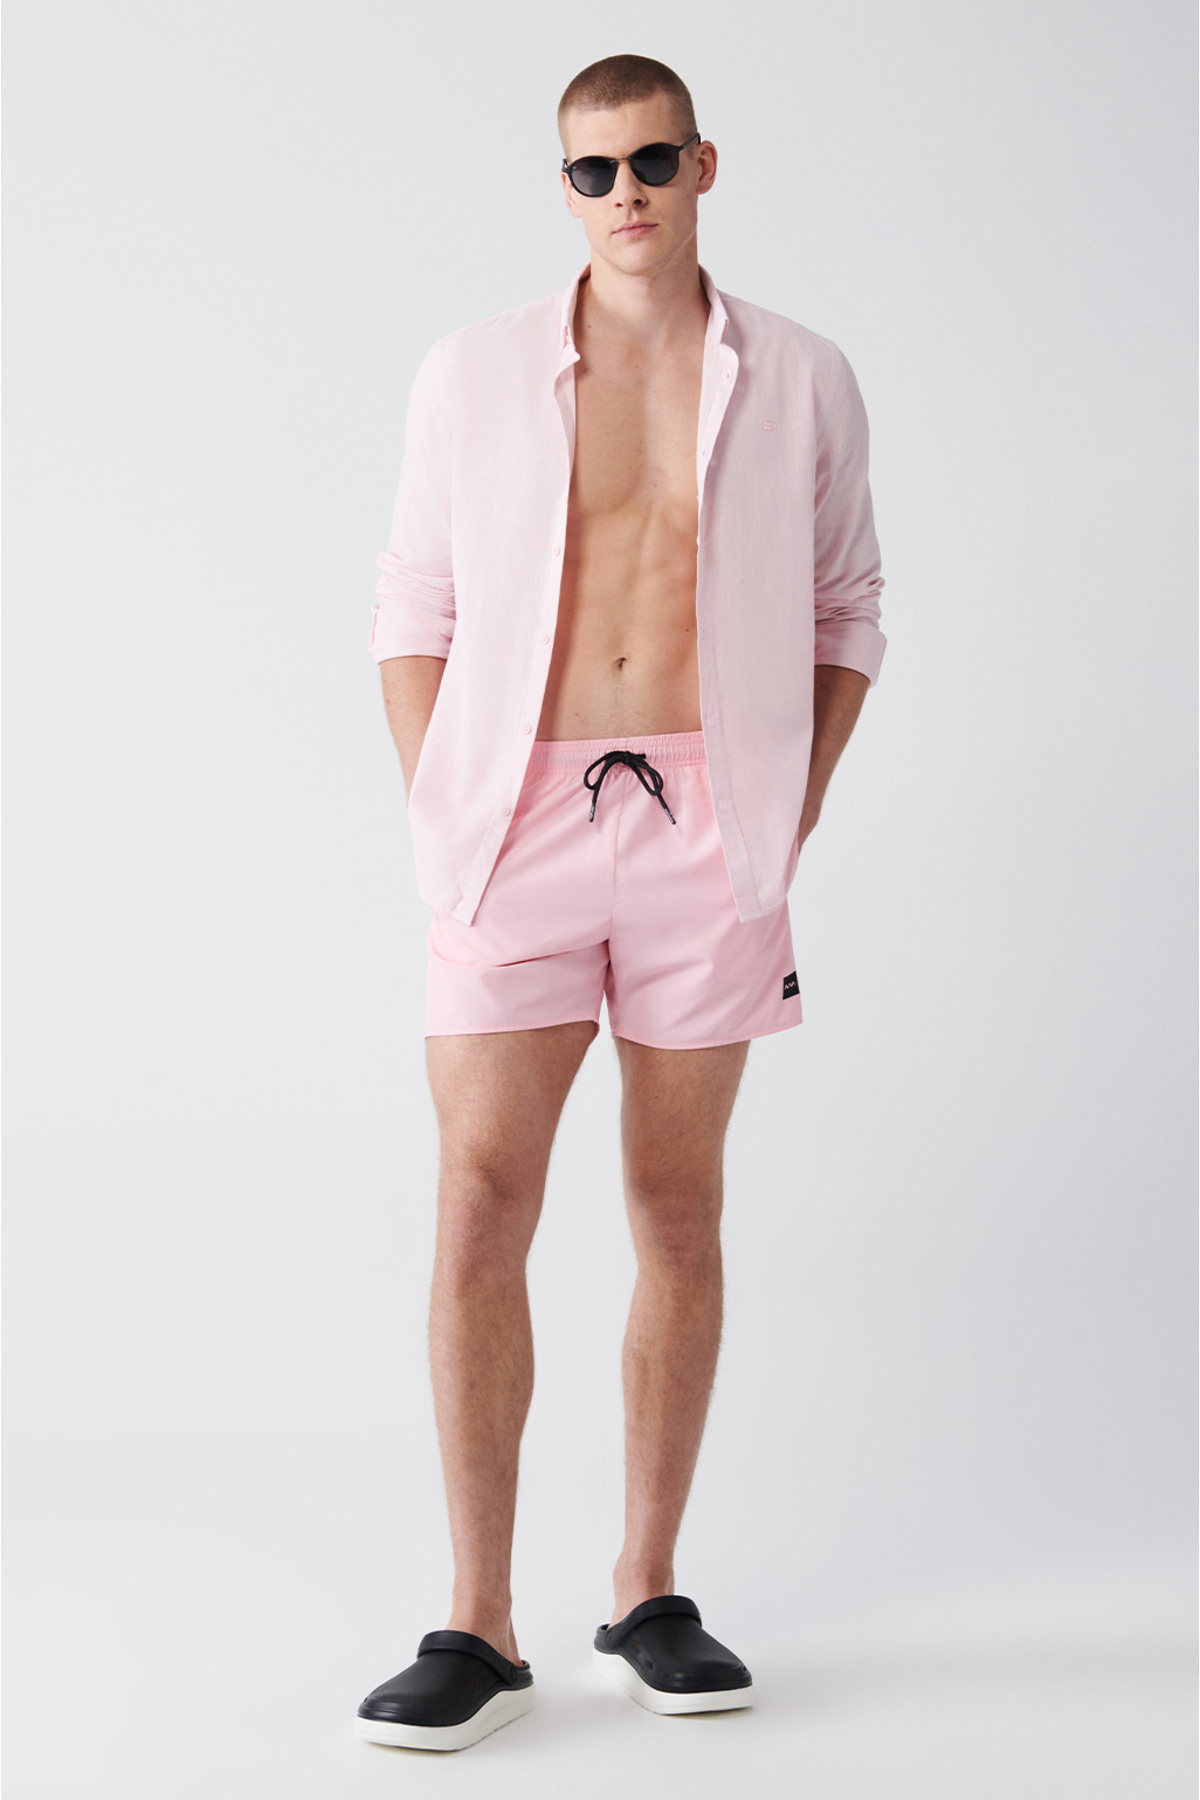 Avva Men's Light Pink Quick Dry Standard Size Flat Swimwear Marine Shorts